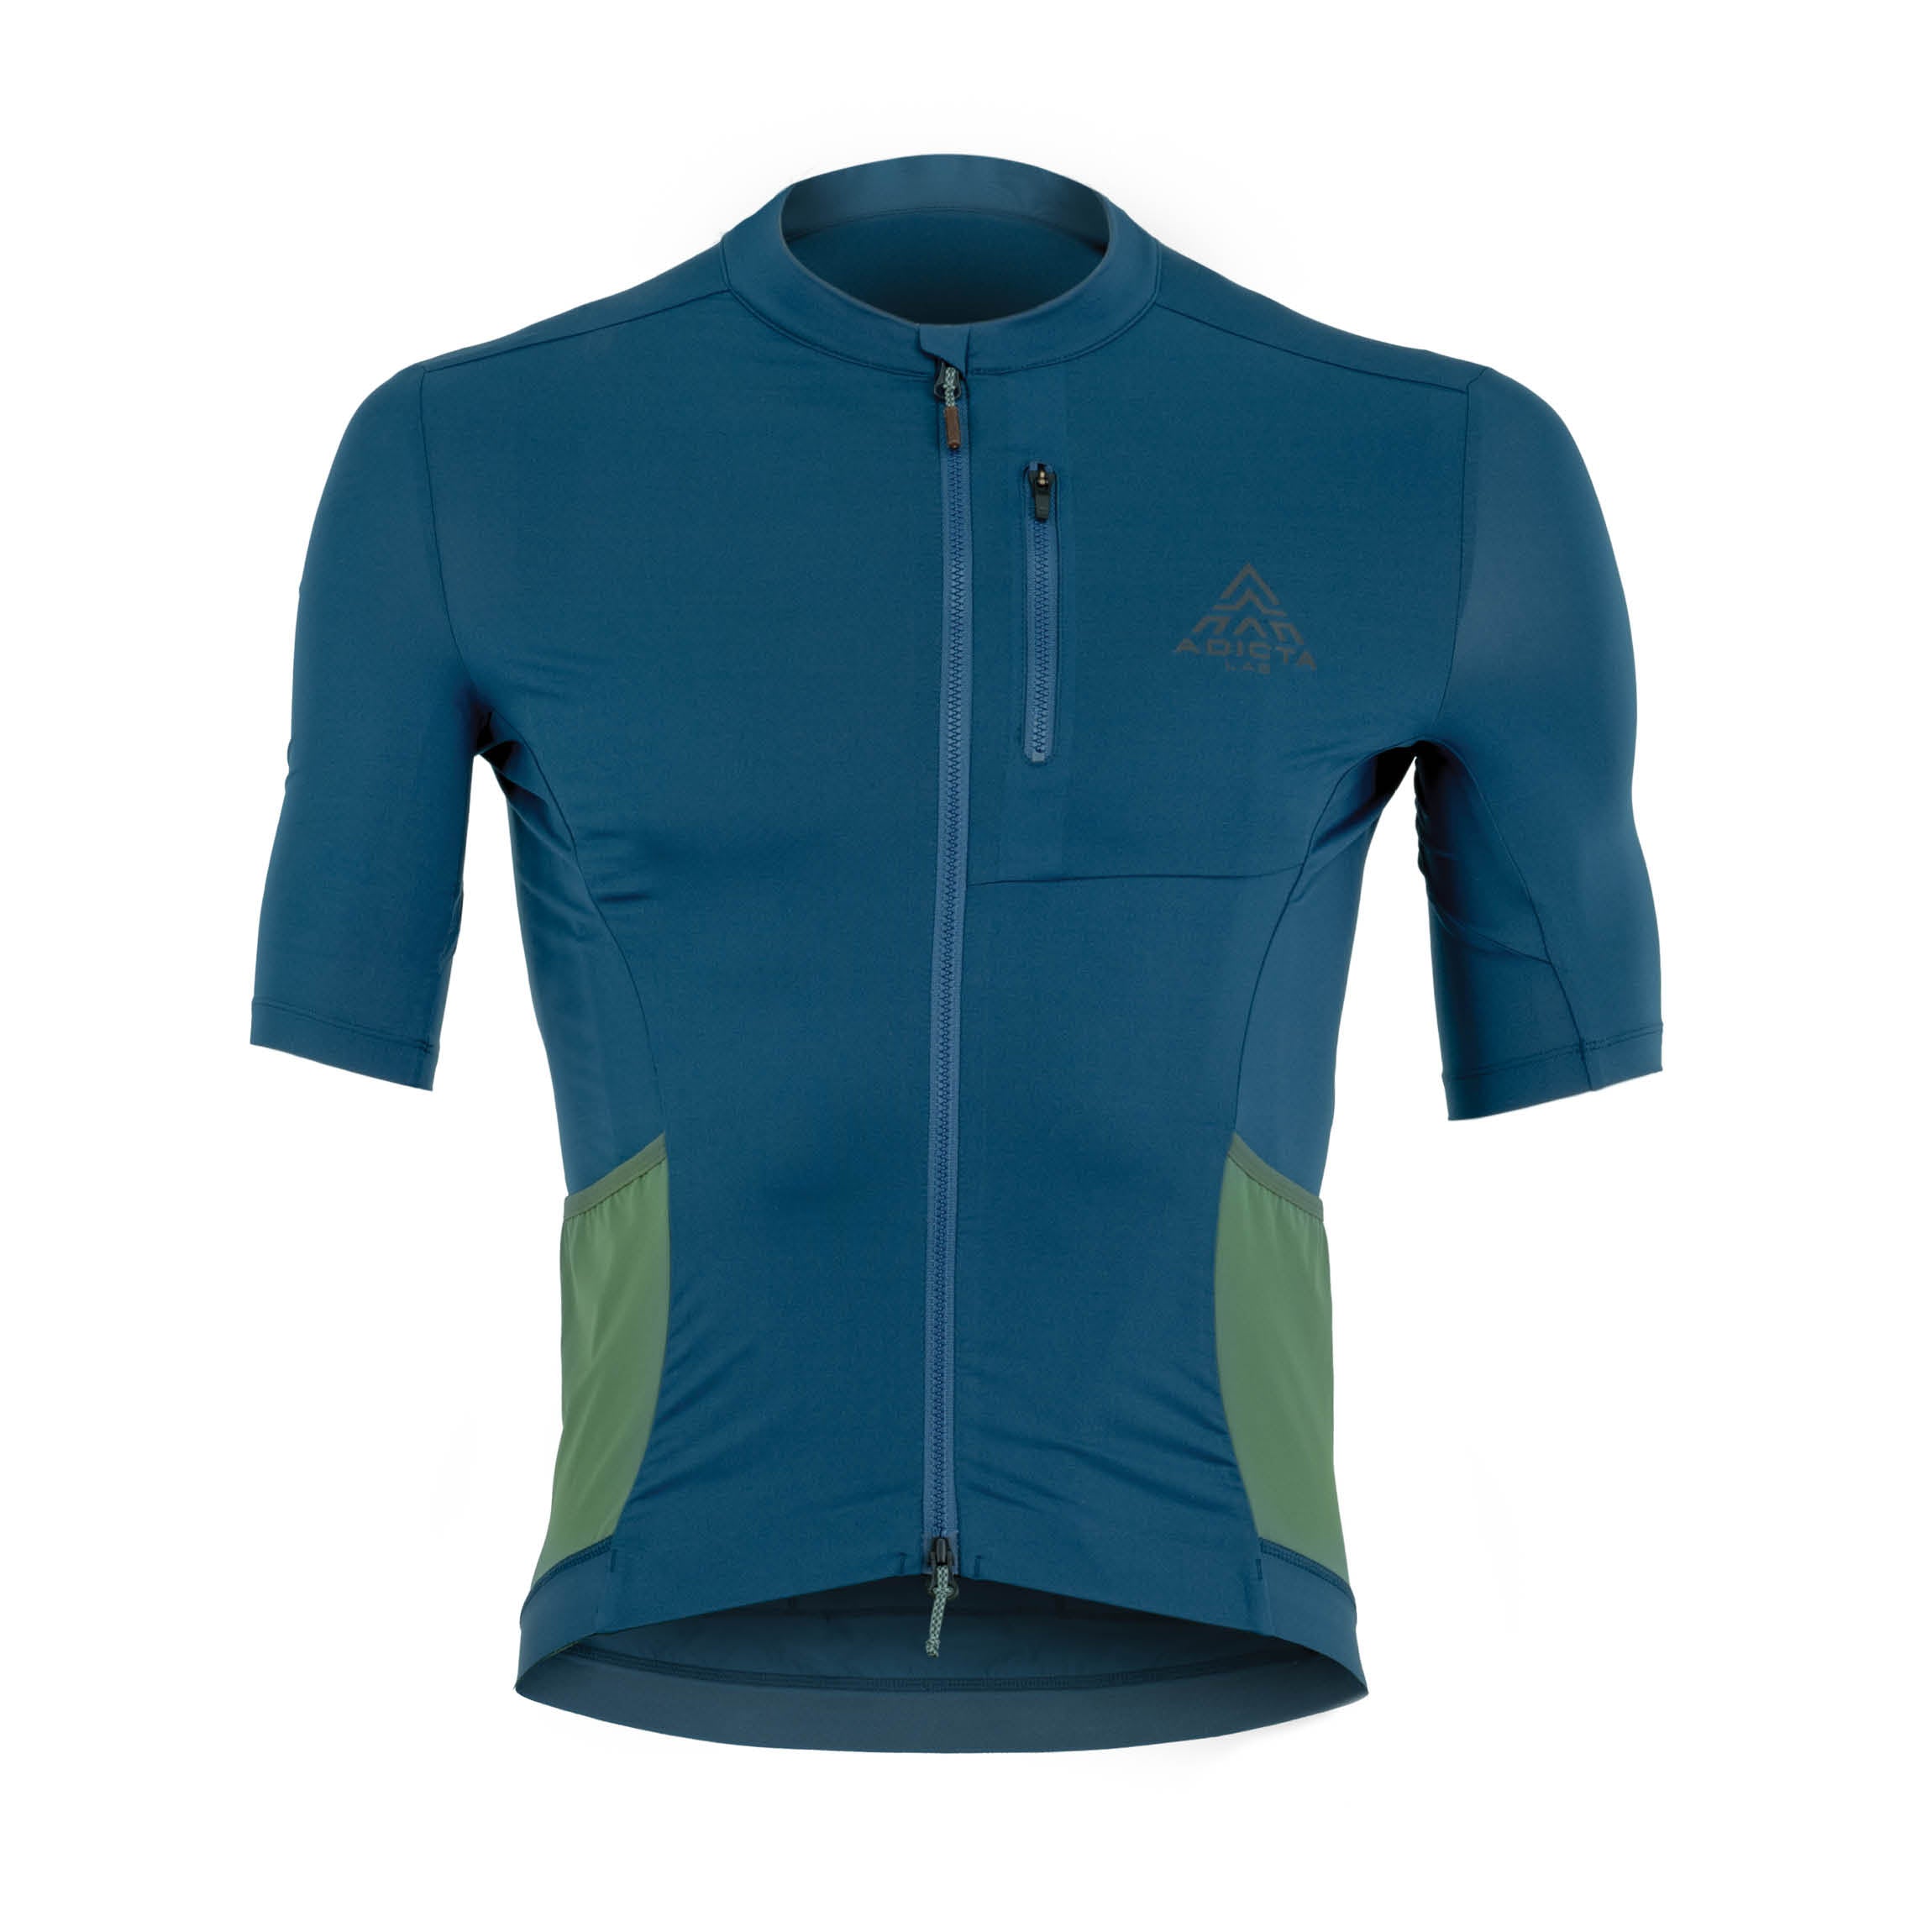 Men's Cargo Jersey | ADICTA LAB | apparel | Apparel, Apparel | Cycling Jerseys